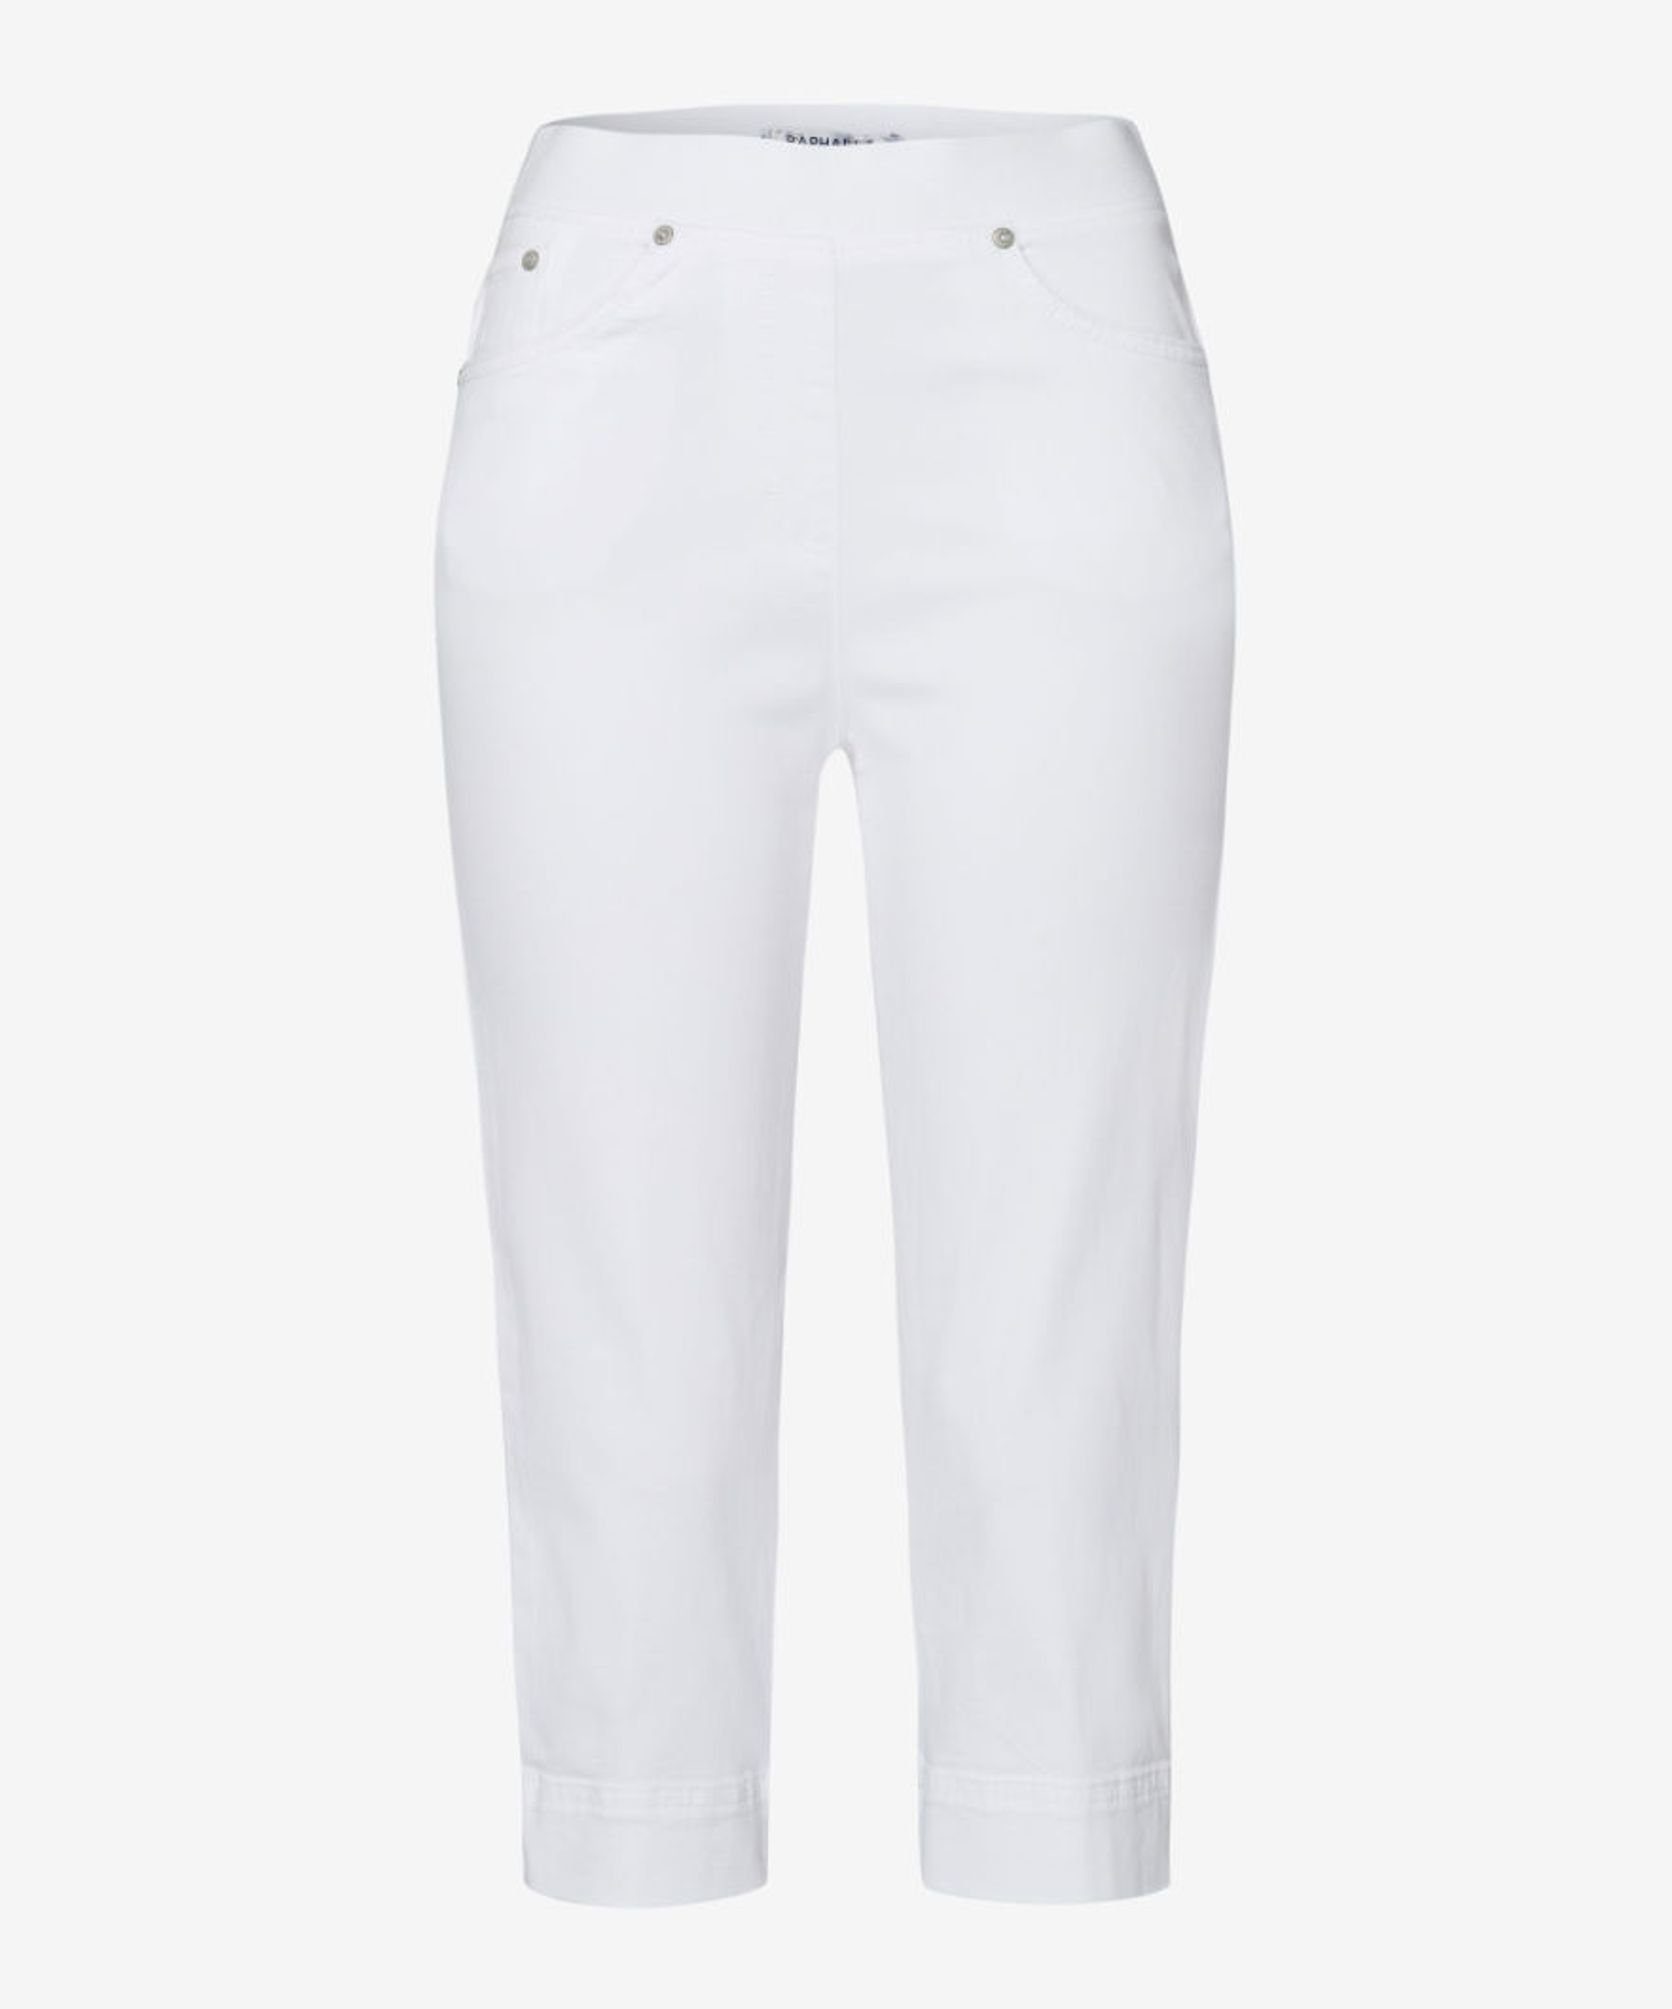 (12-6308) (99) Pamina by Sommerhose RAPHAELA White 5-Pocket-Jeans Capri BRAX